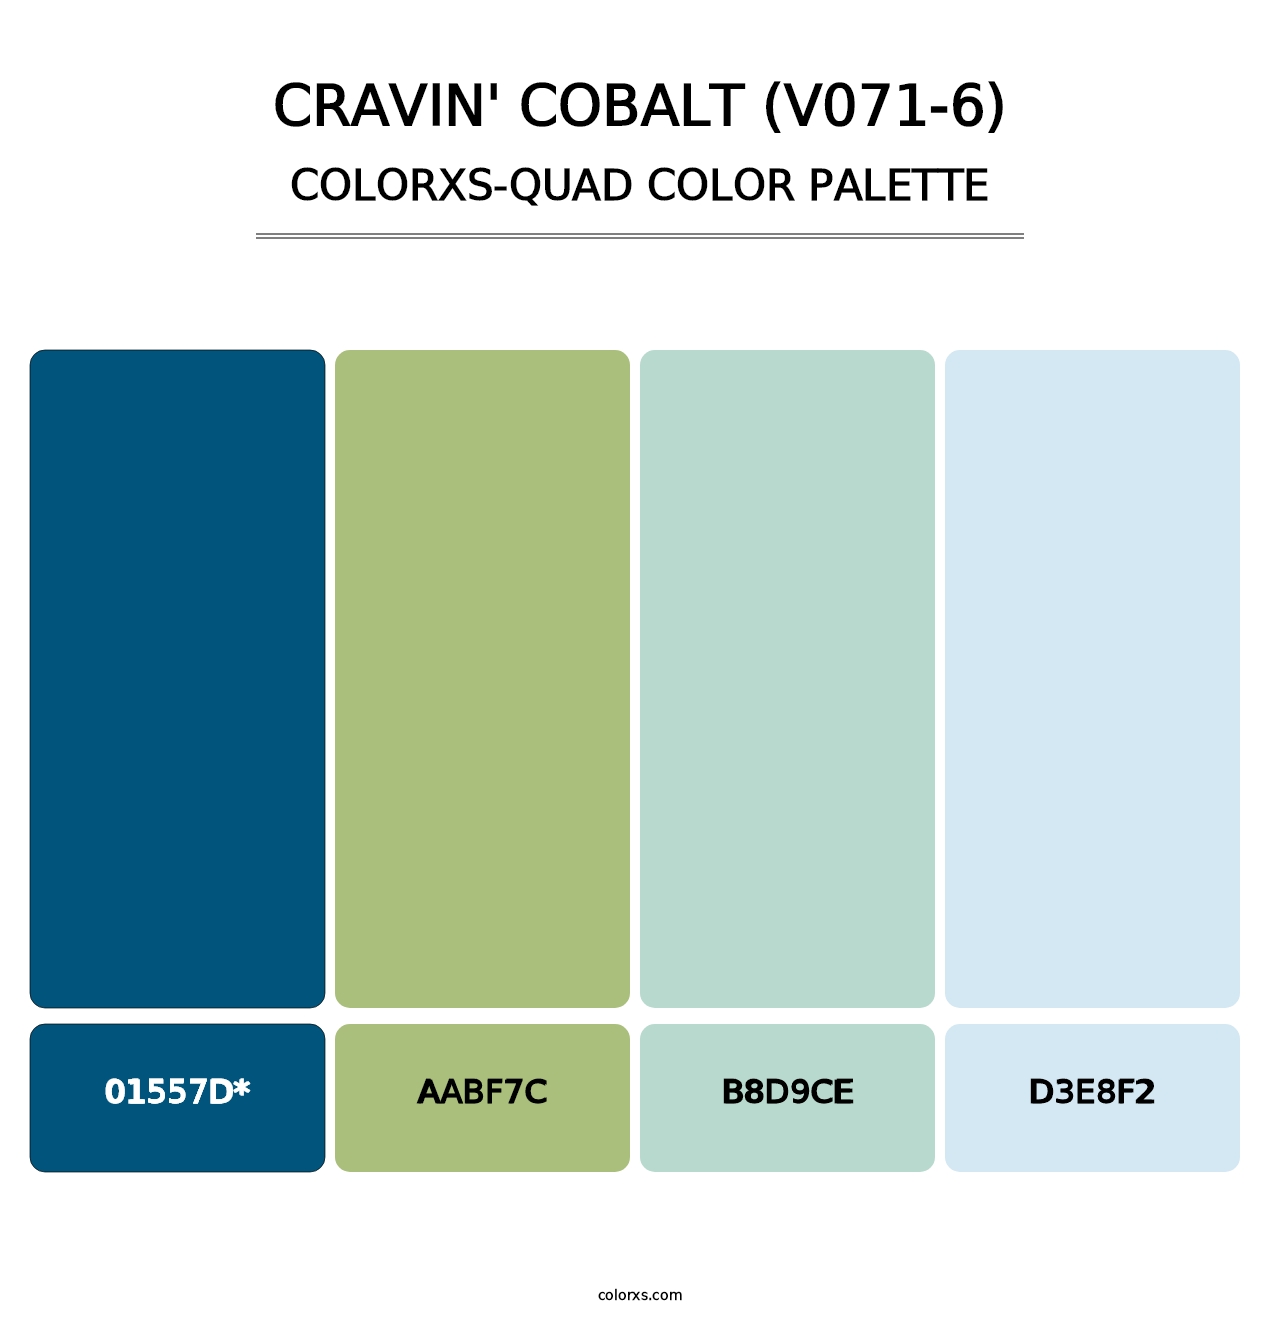 Cravin' Cobalt (V071-6) - Colorxs Quad Palette